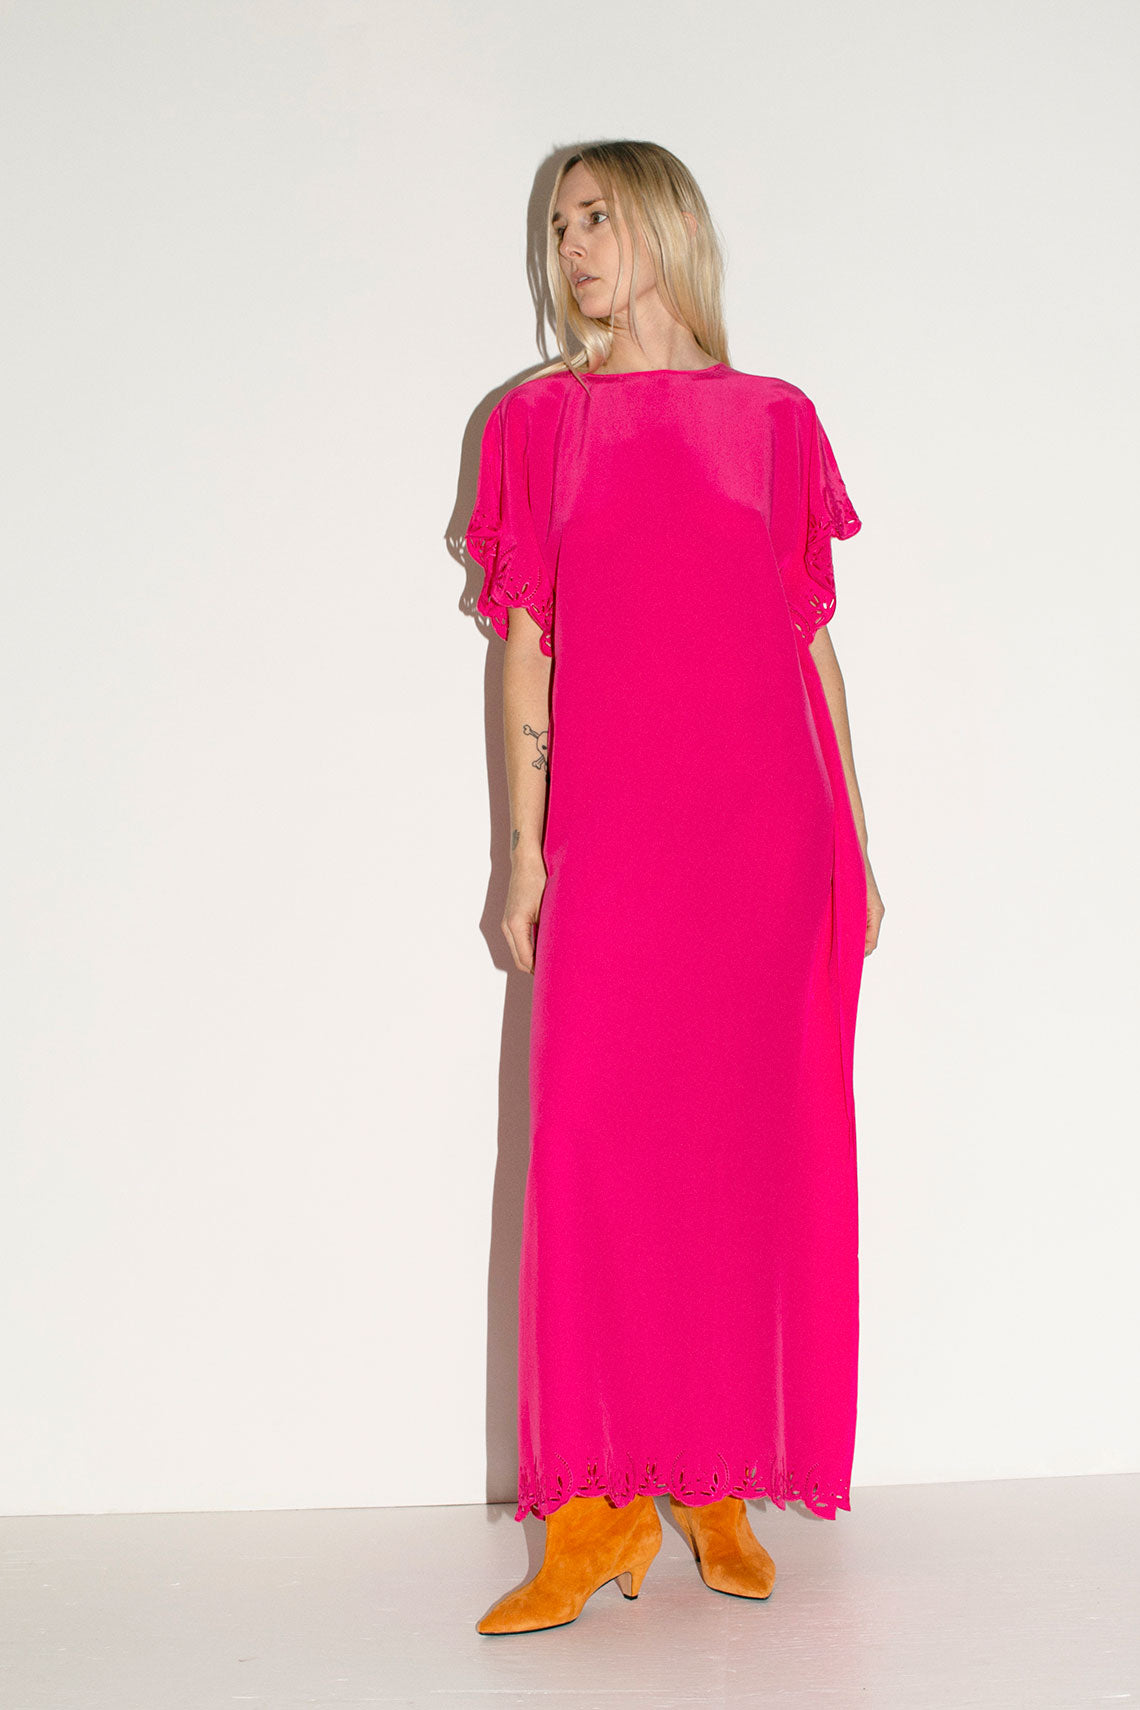 Hot Pink Saturnus Dress